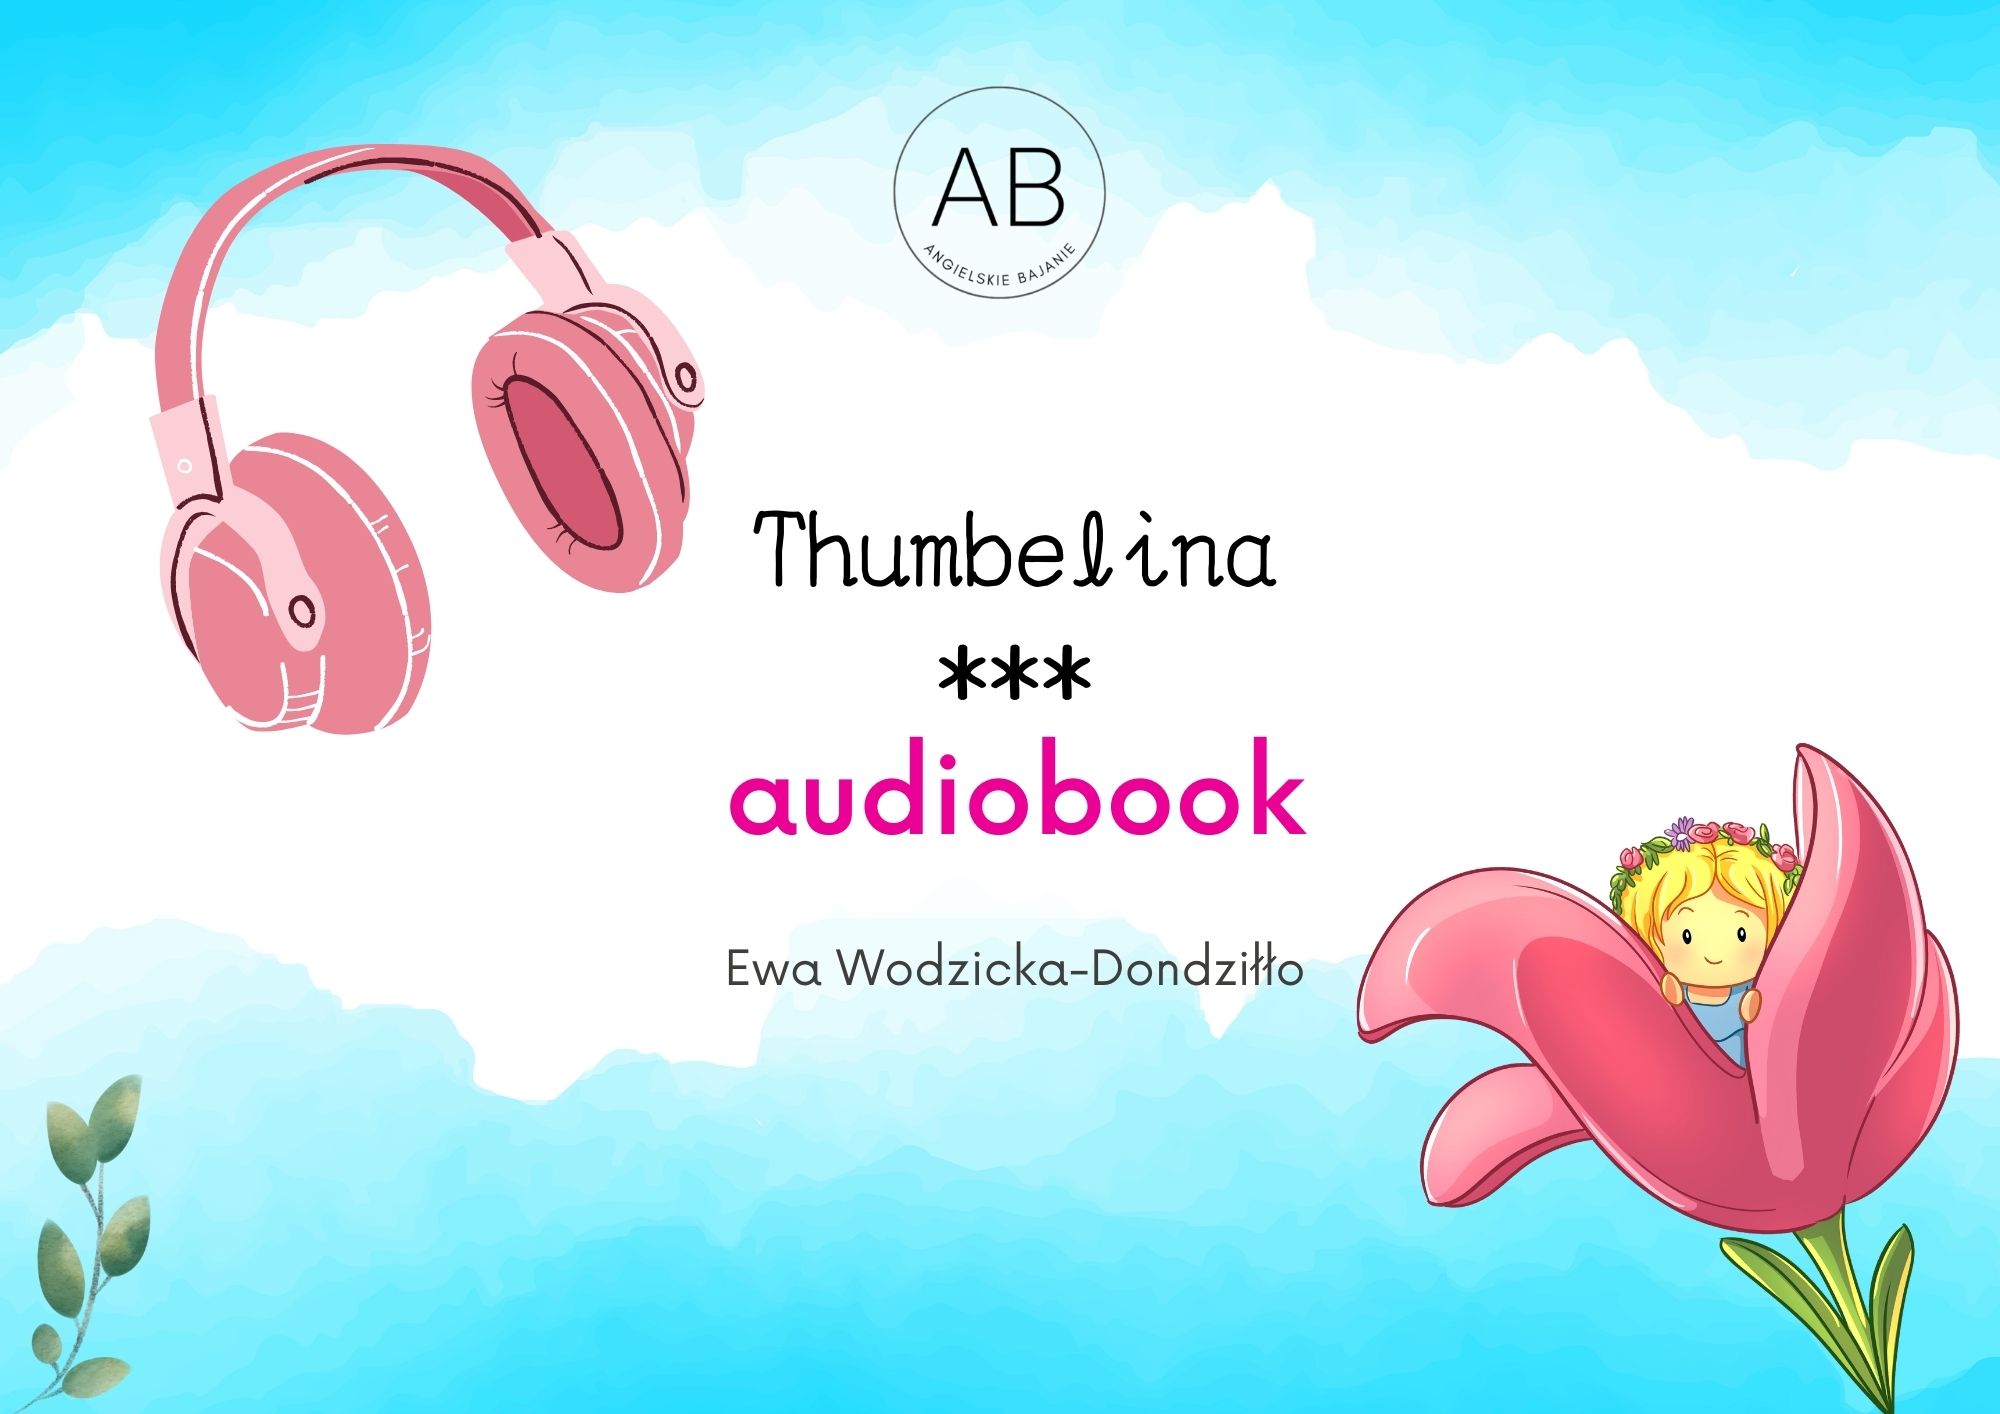 Thumbelina audiobook